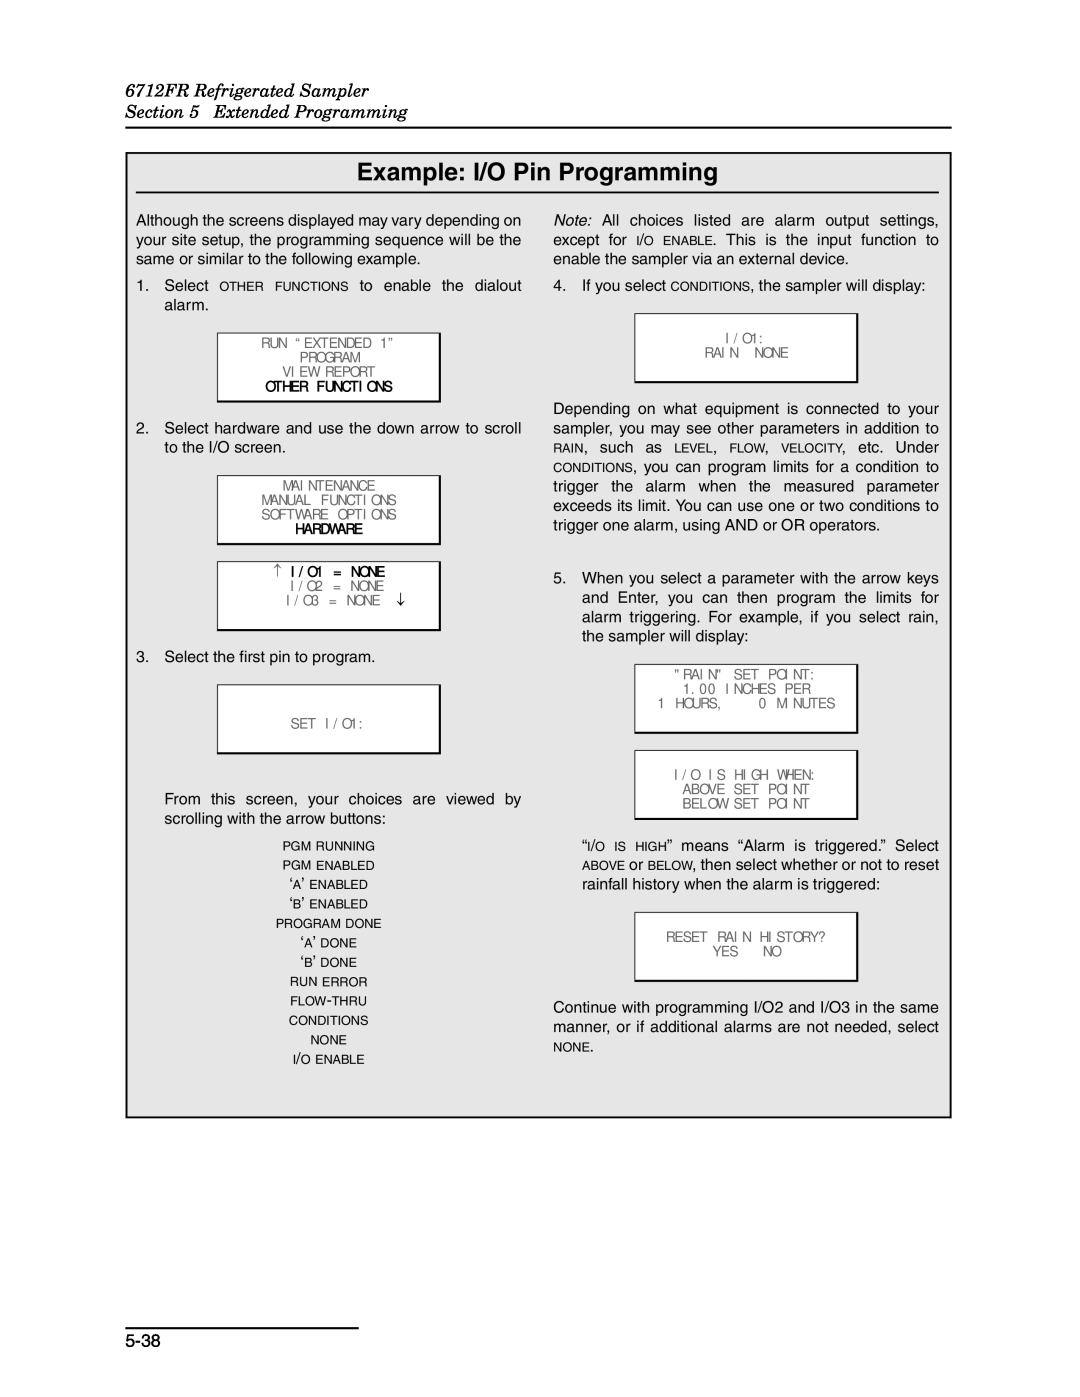 Teledyne manual Example I/O Pin Programming, 6712FR Refrigerated Sampler Extended Programming, 5-38 